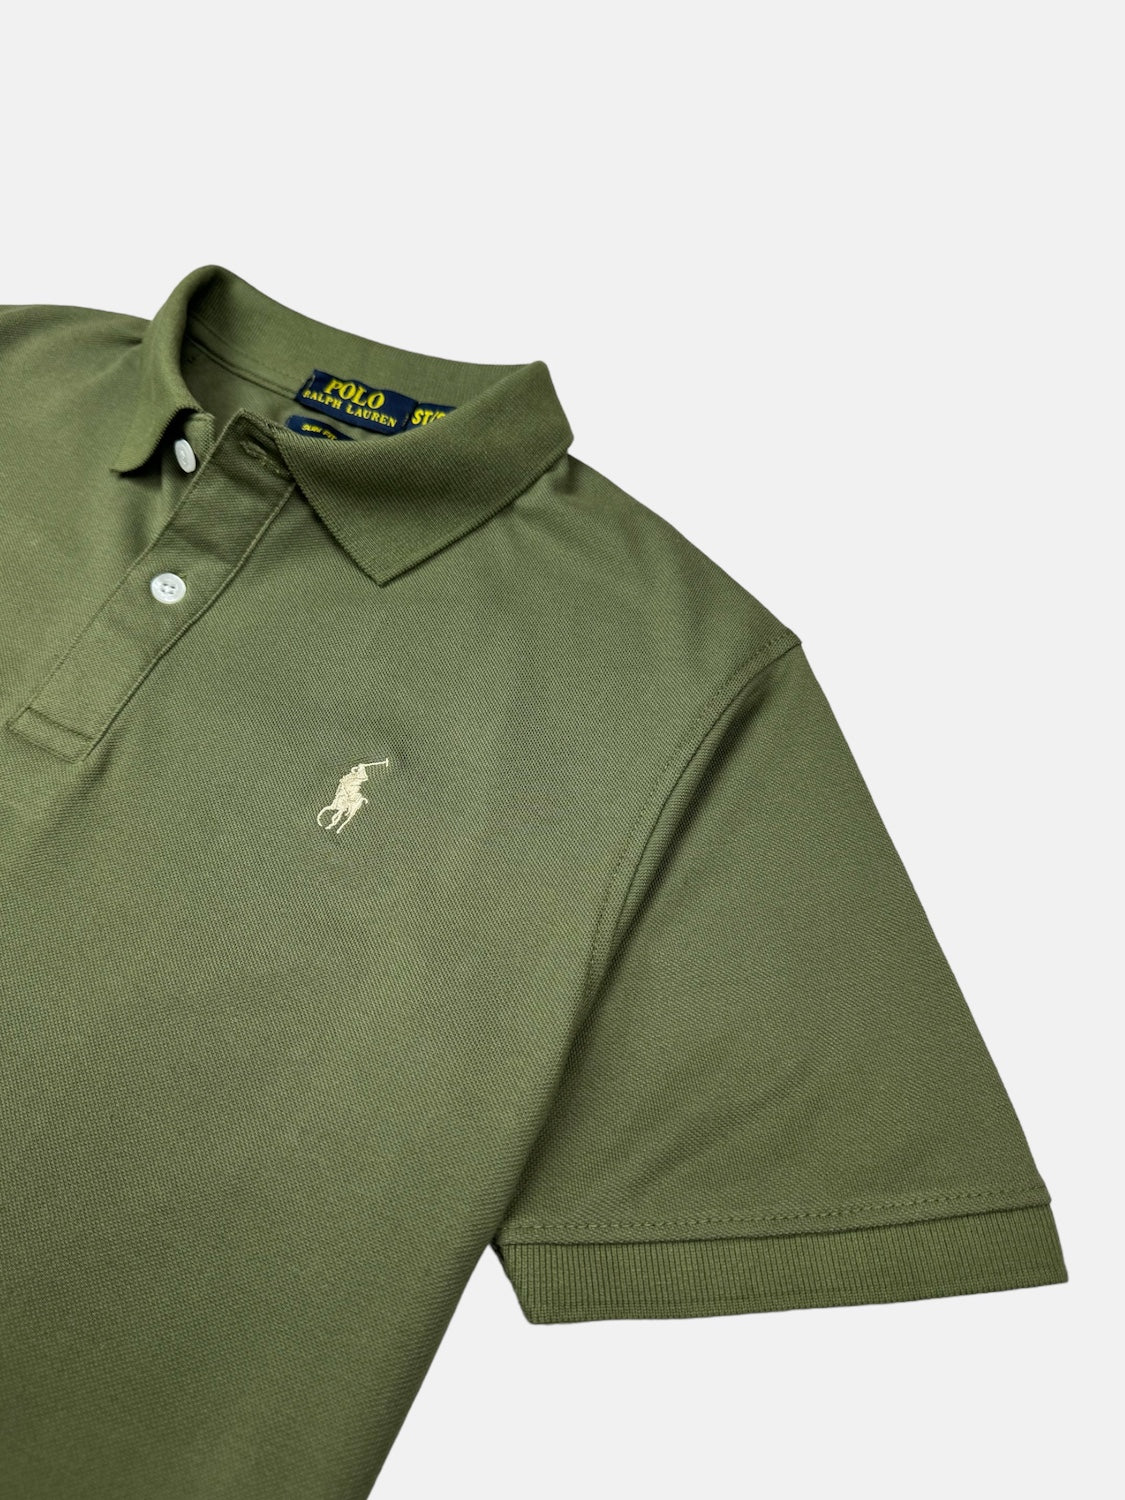 RL Small Pony Polo Shirt (Olive Green)